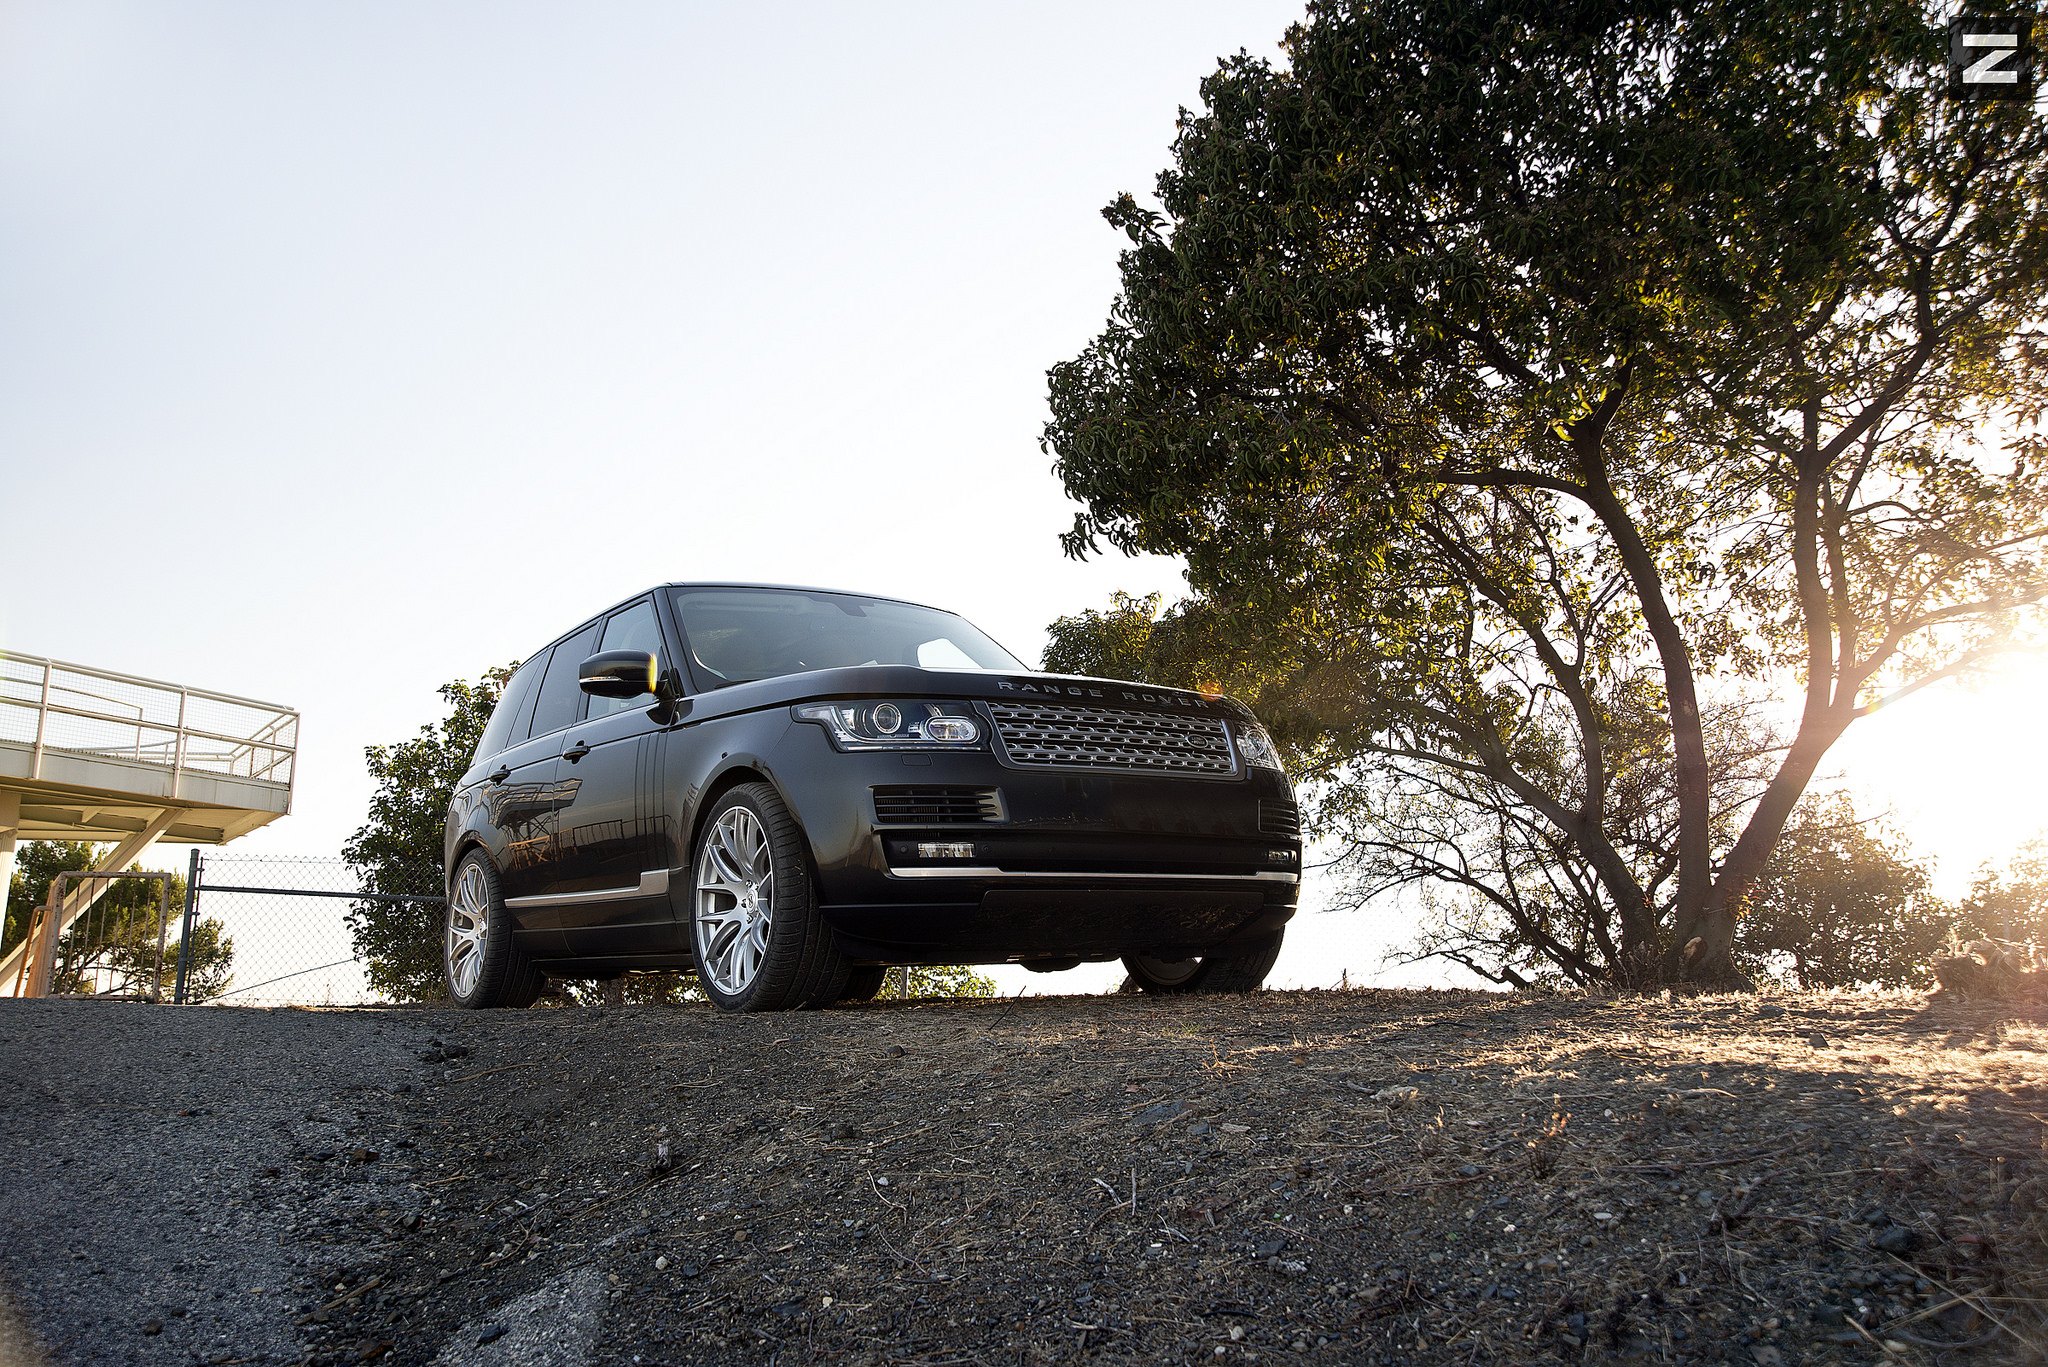 Black Range Rover with Dark Smoke Headlights - Photo by Zito Wheels